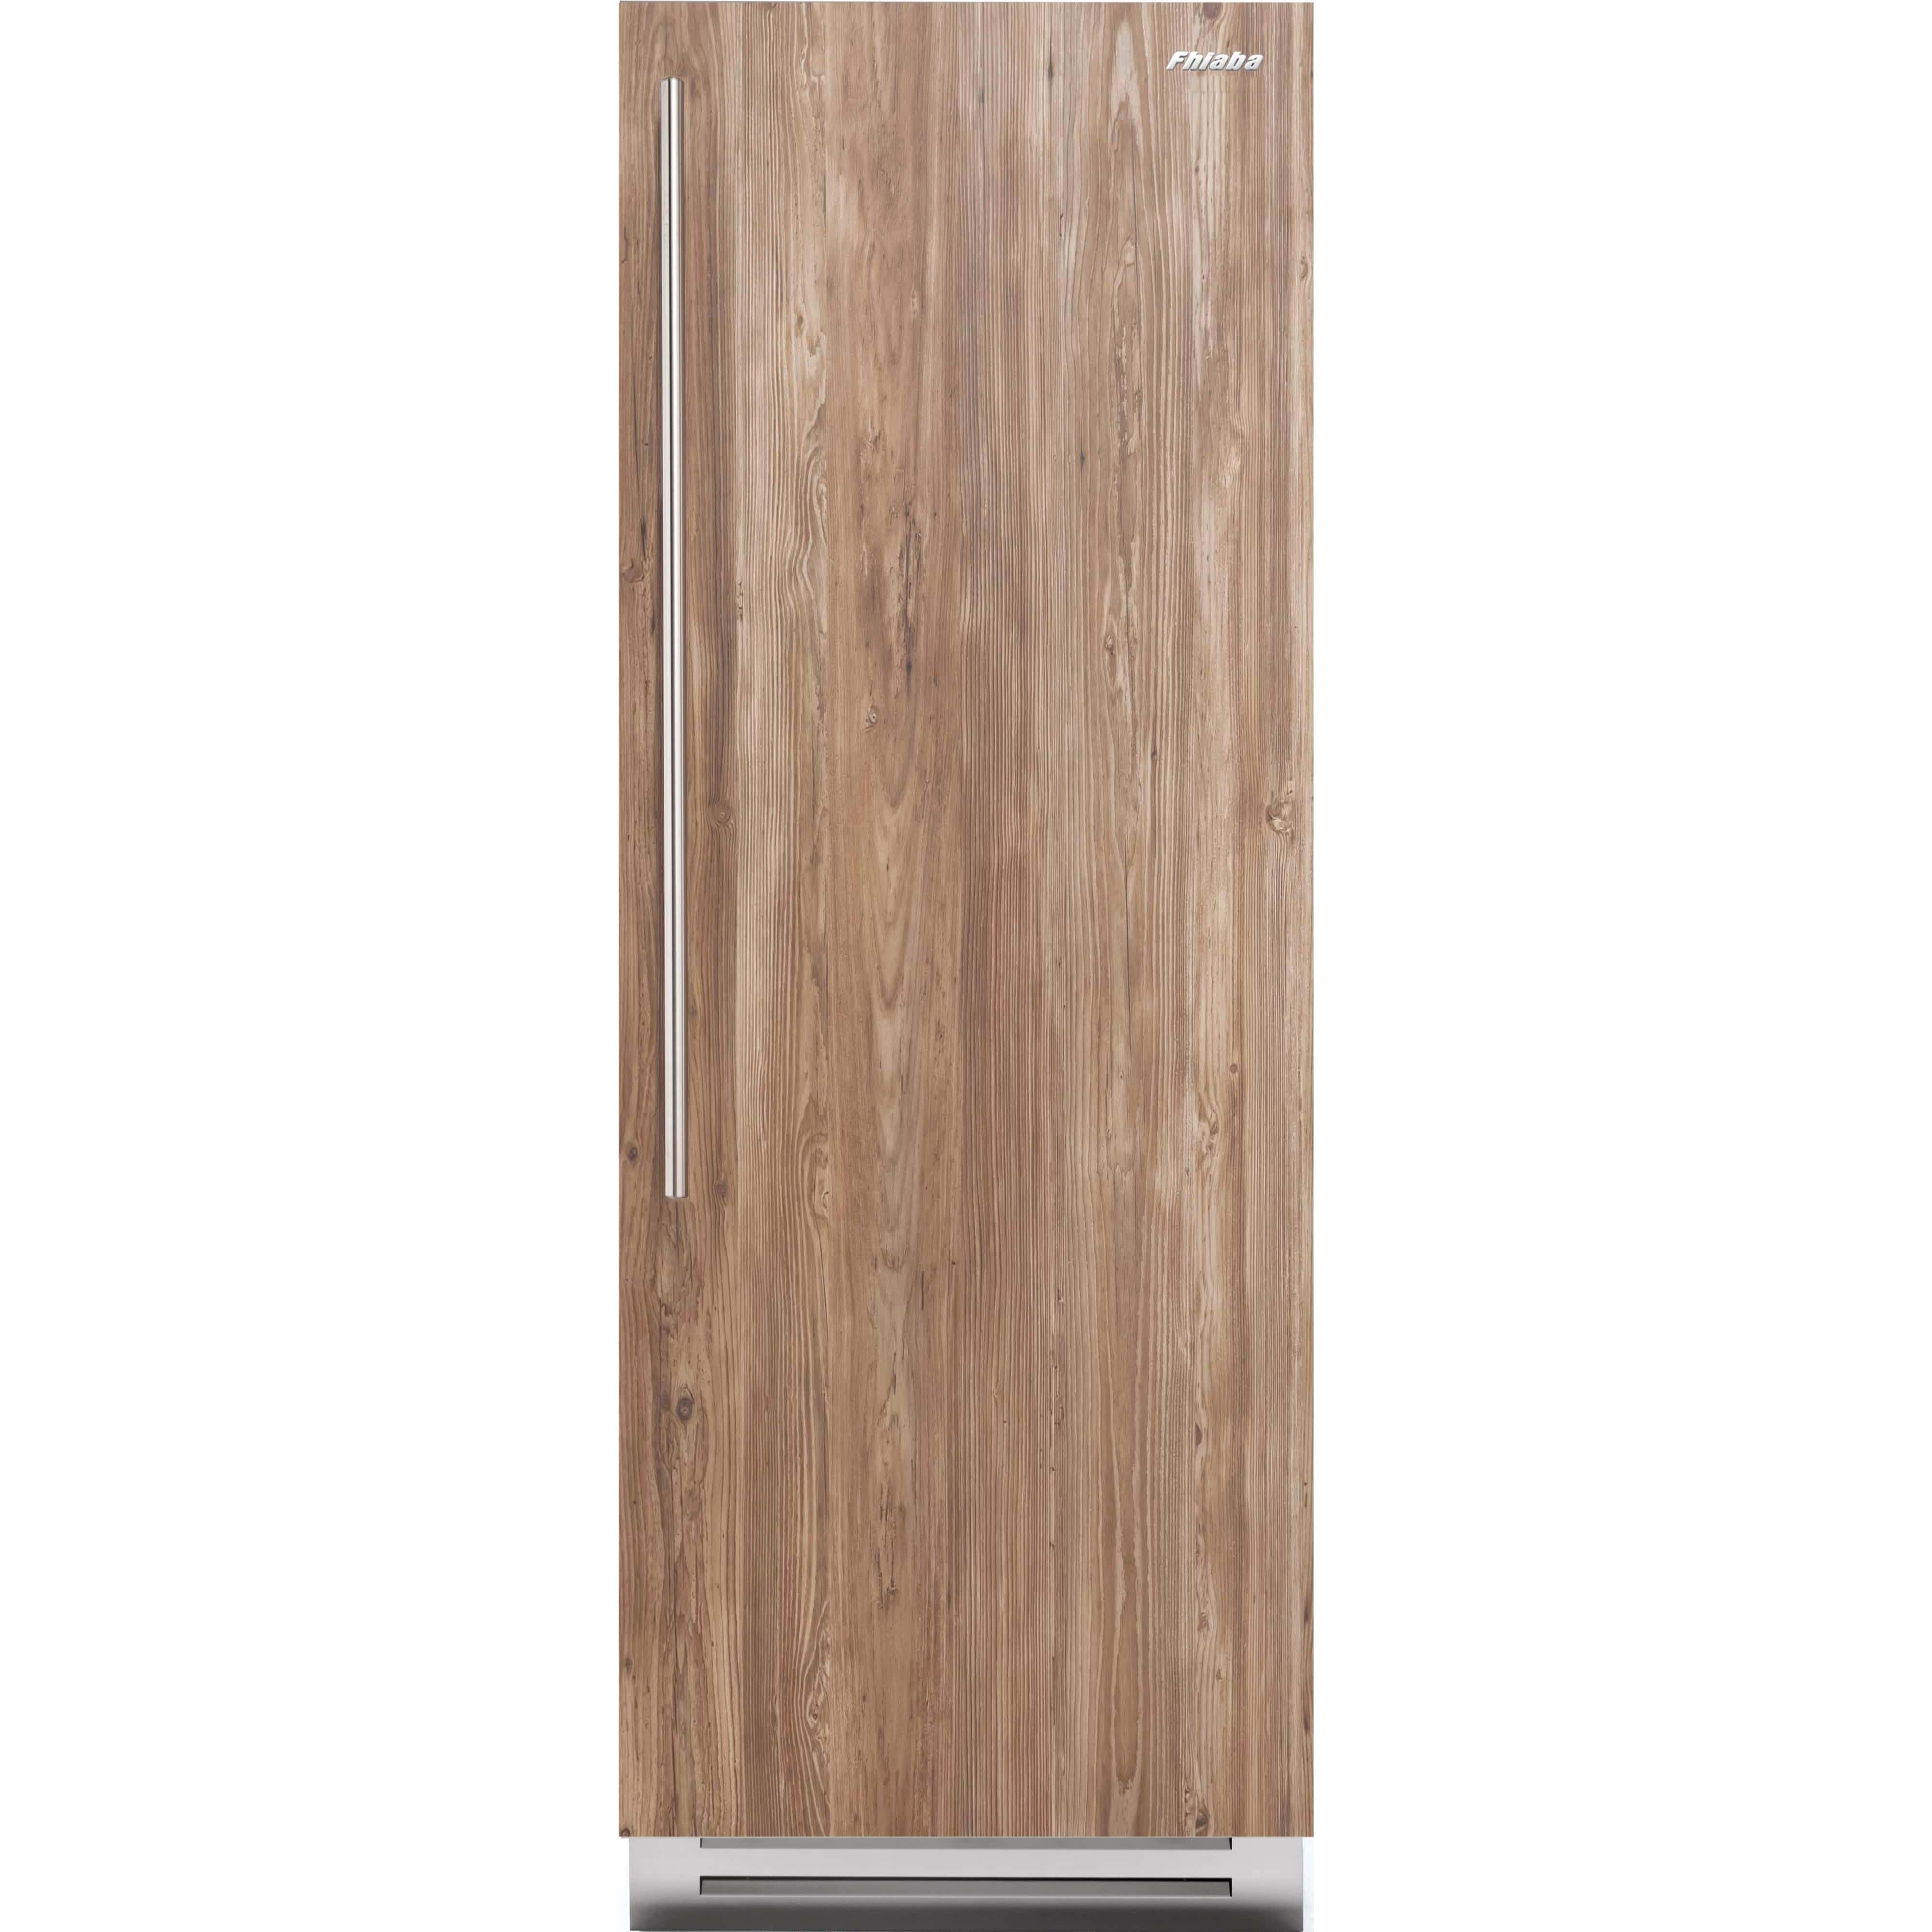 Fhiaba 16.87 cu. ft. Upright Freezer with Smart Touch TFT Display FI30FZC-RO2 Freezers FI30FZCRO2 Luxury Appliances Direct